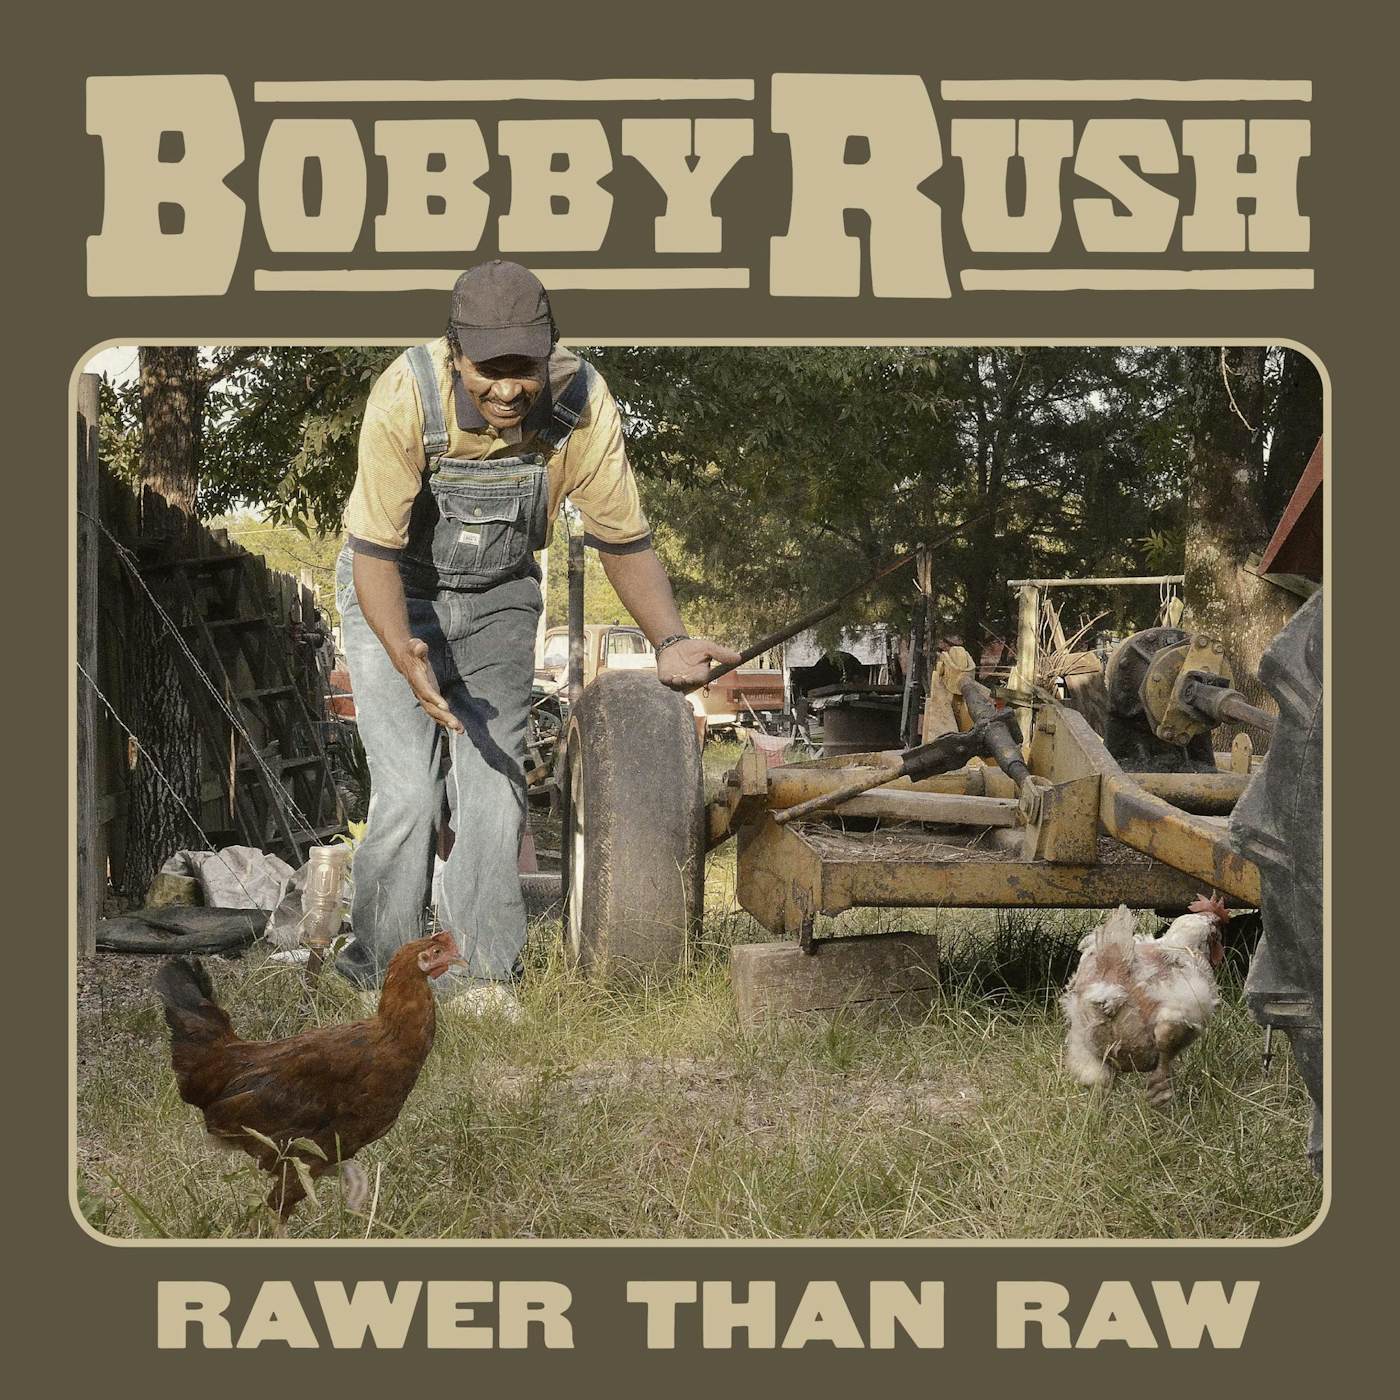 Bobby Rush Rawer Than Raw Vinyl Record